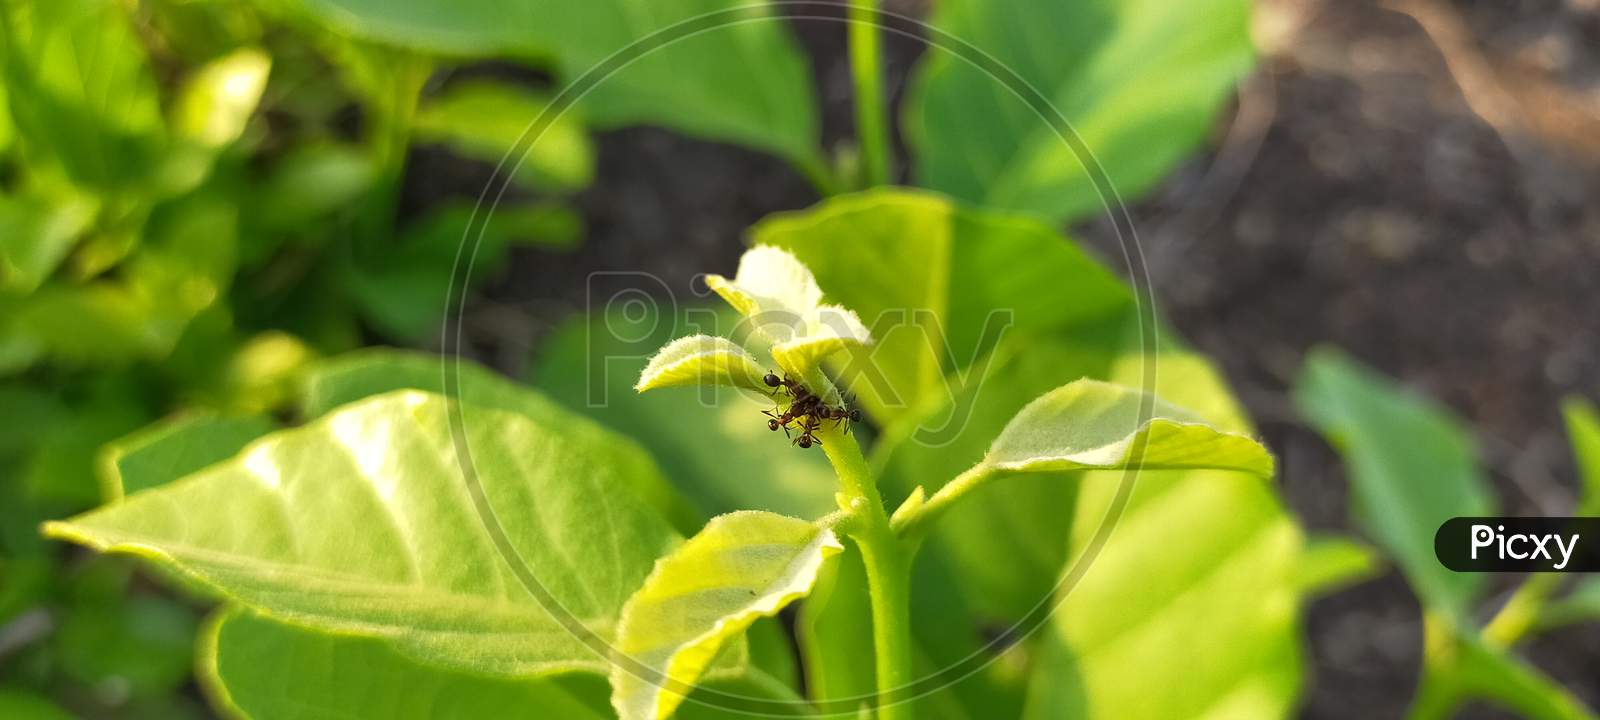 Ant on fresh green leaves